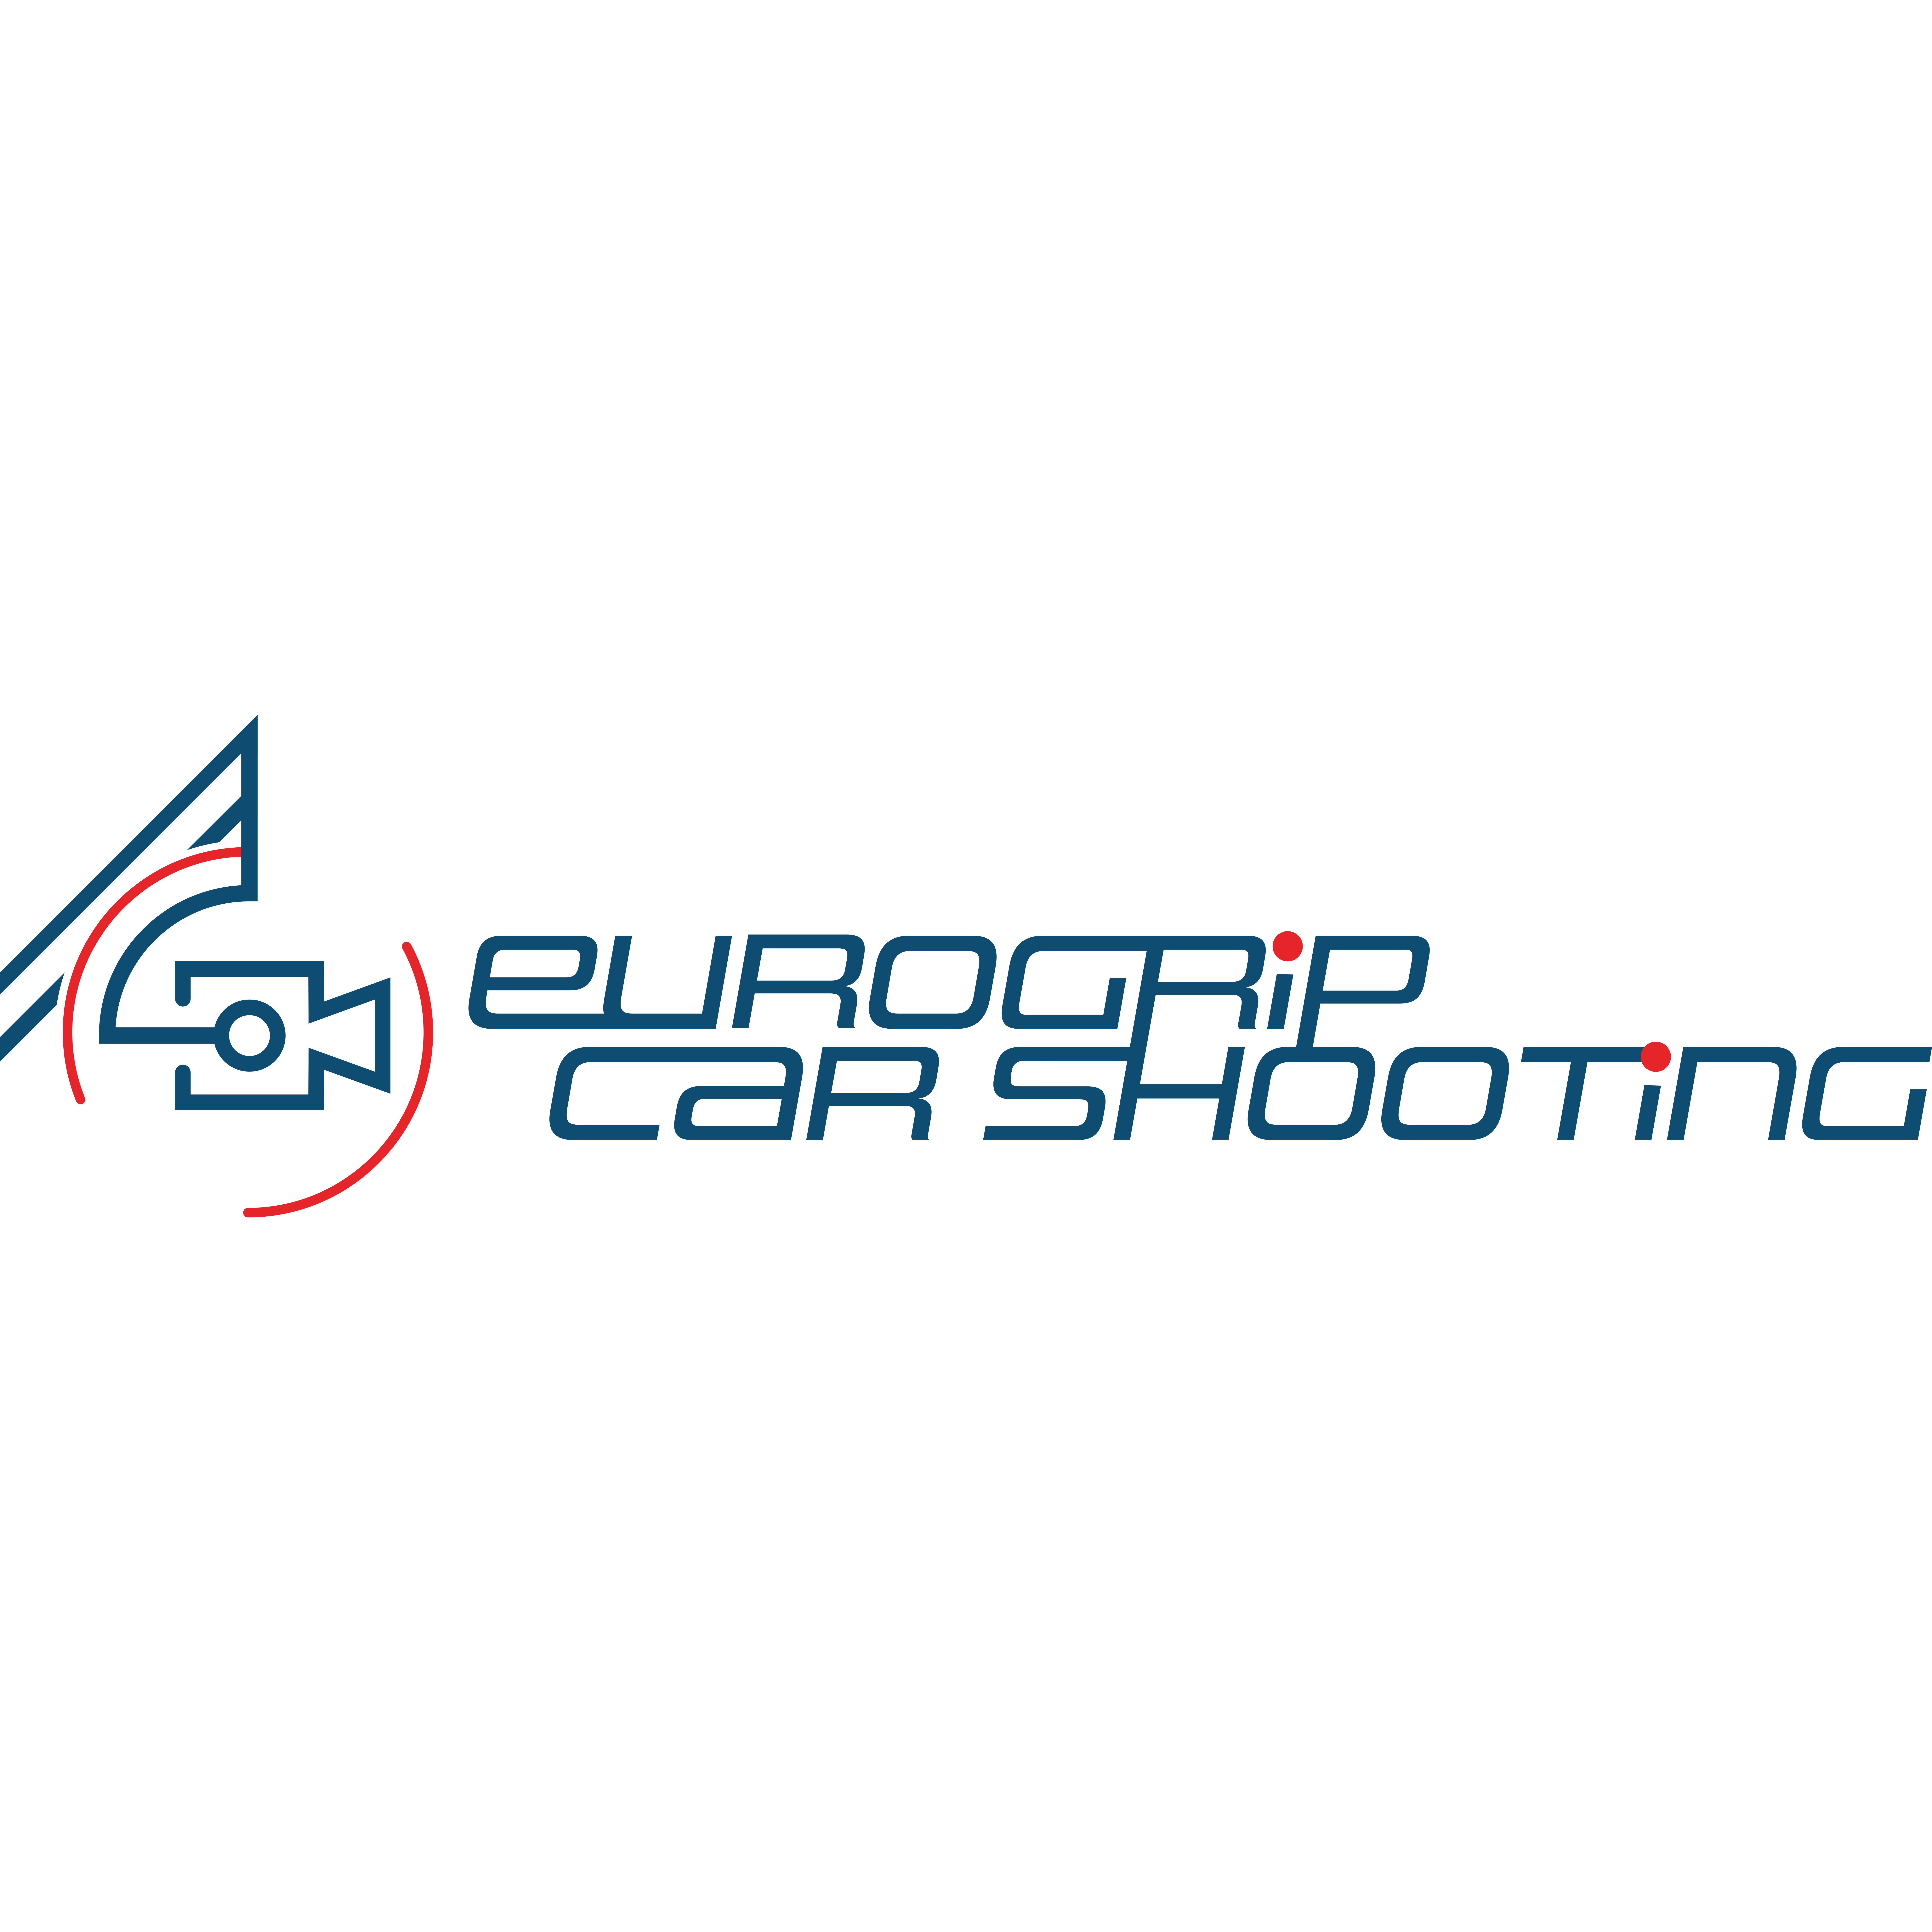 Eurogrip Car Shooting logo Main Blue red